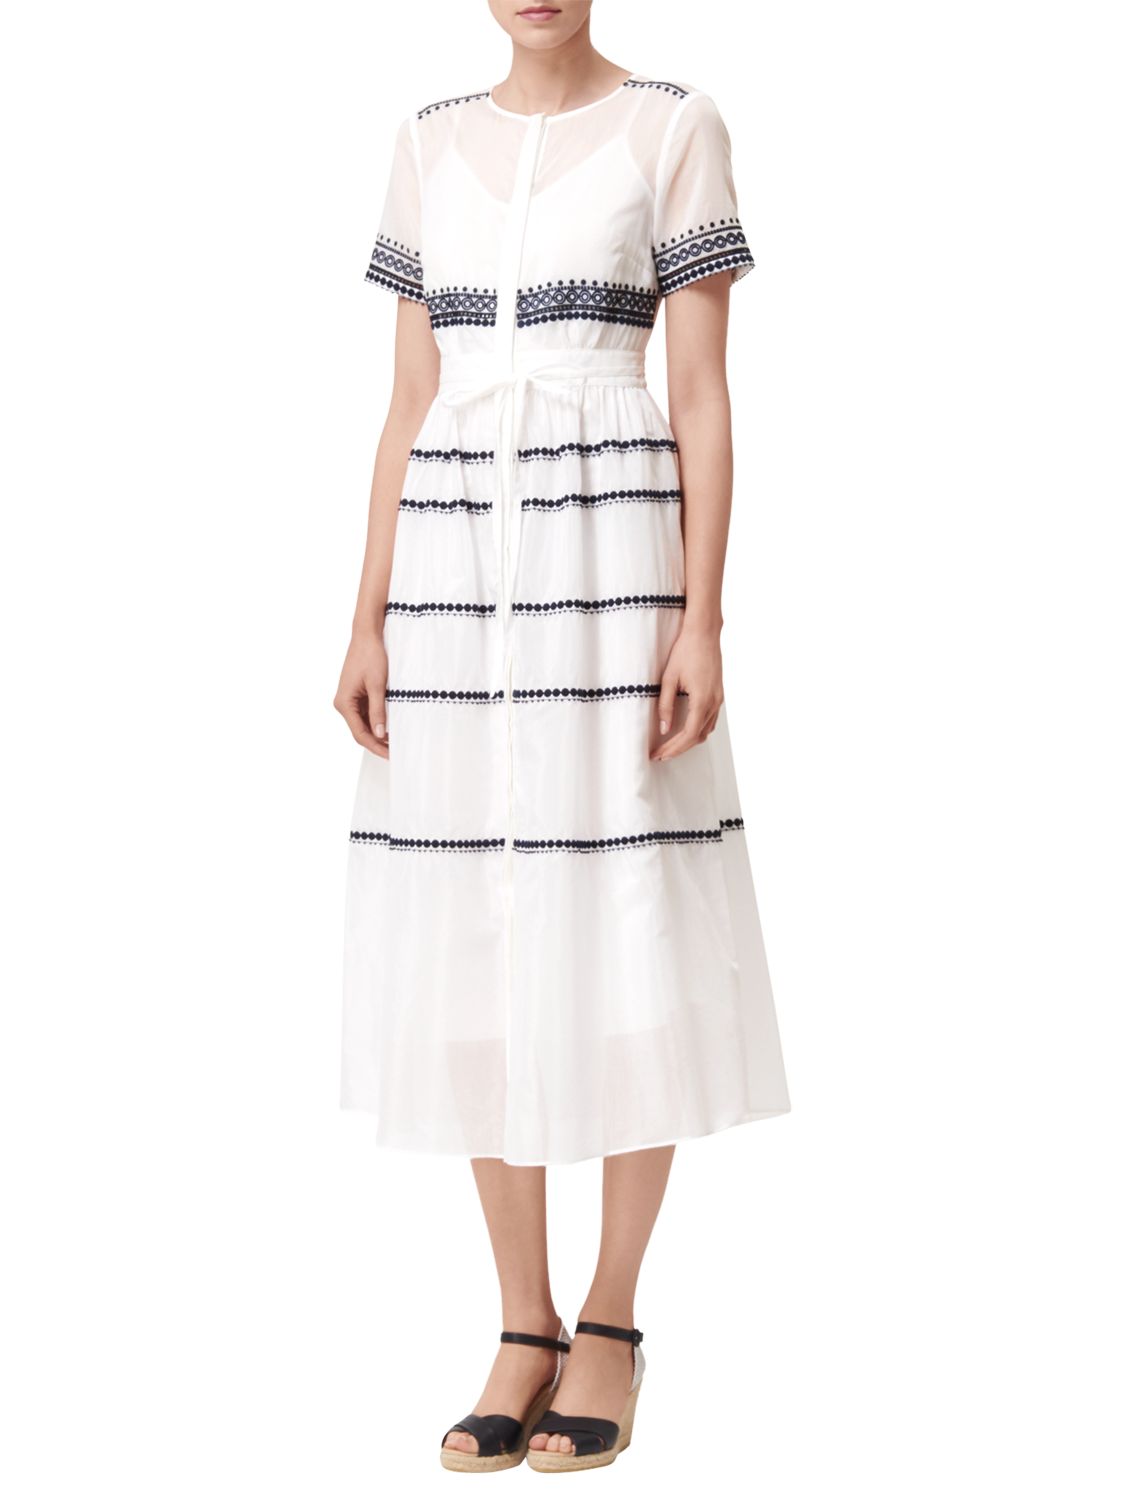 L.K. Bennett Tarley Embroidered Dress, Cream, 10